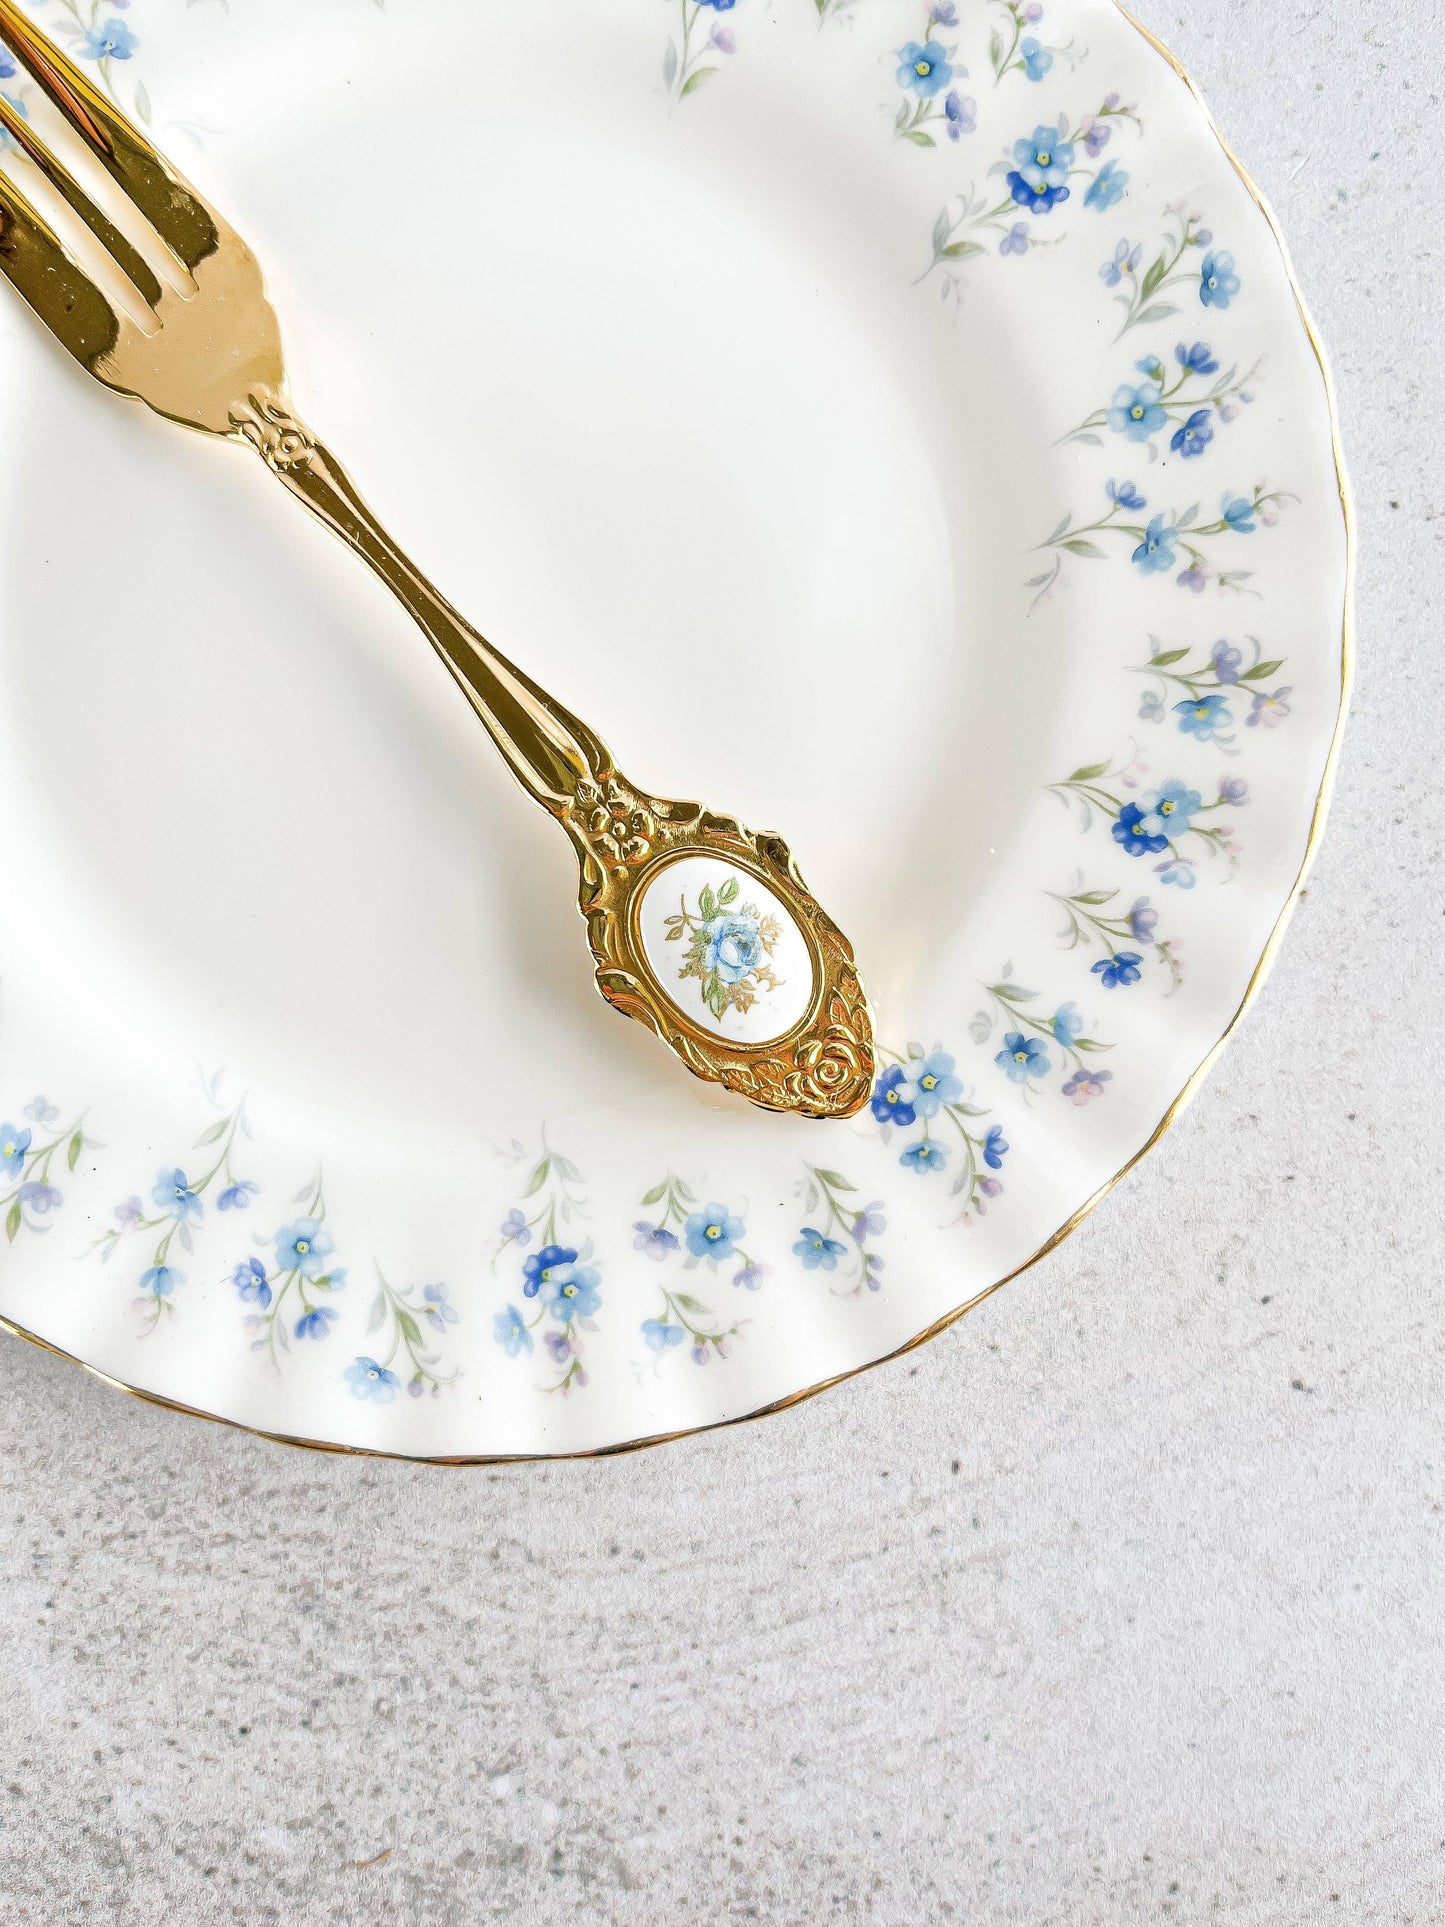 Eetrite 24k Gold-Plated Cake Forks with Floral Medallion - Set of 6 - SOSC Home